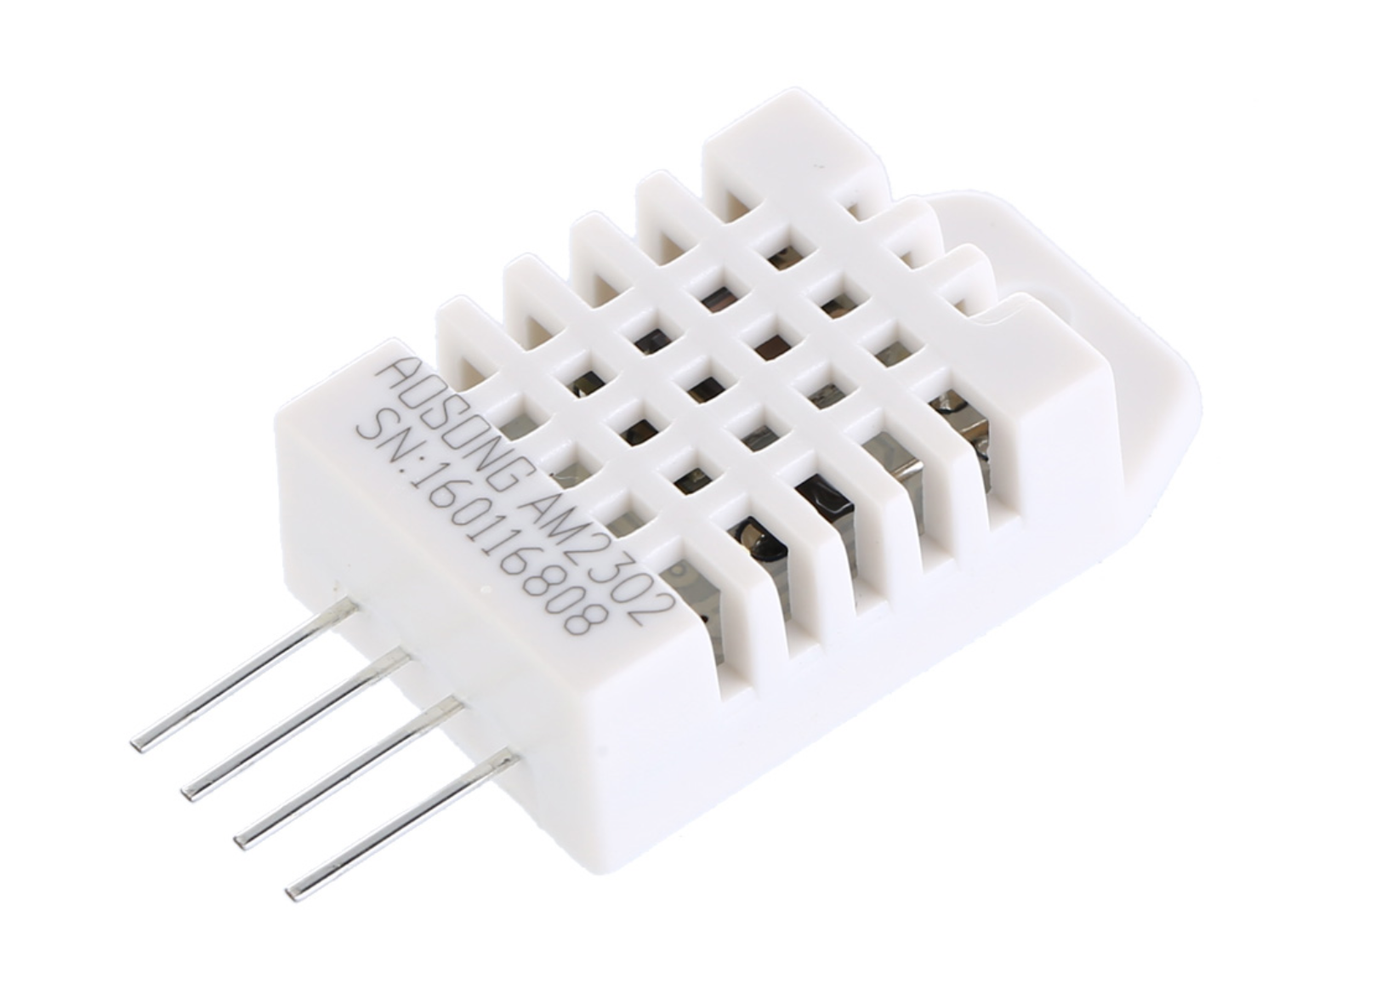 DHT22 Humidity / Temperature Sensor Module - ProtoSupplies